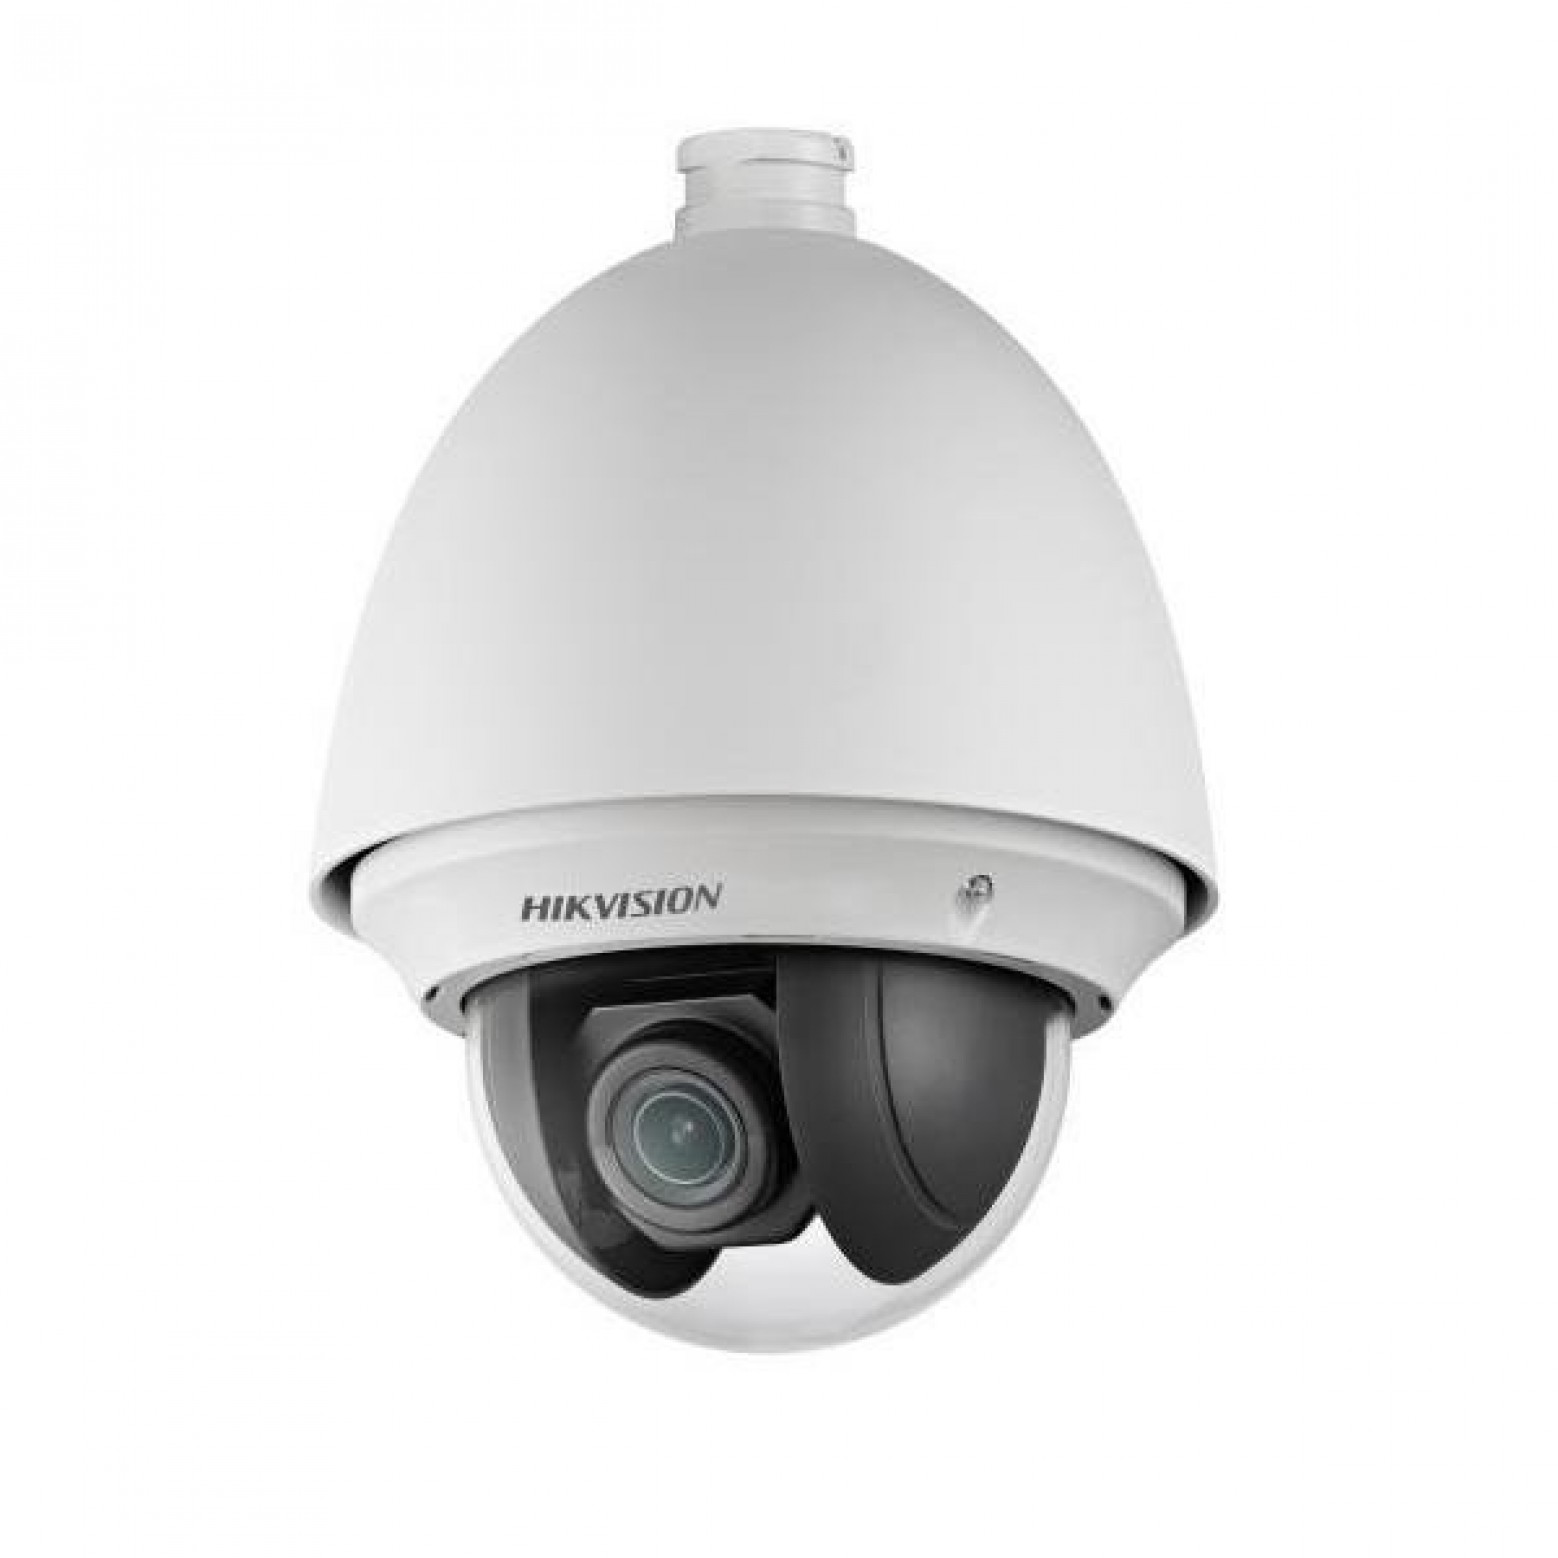 Hikvision DS-2DE4220W-AE Full HD PTZ dome camera